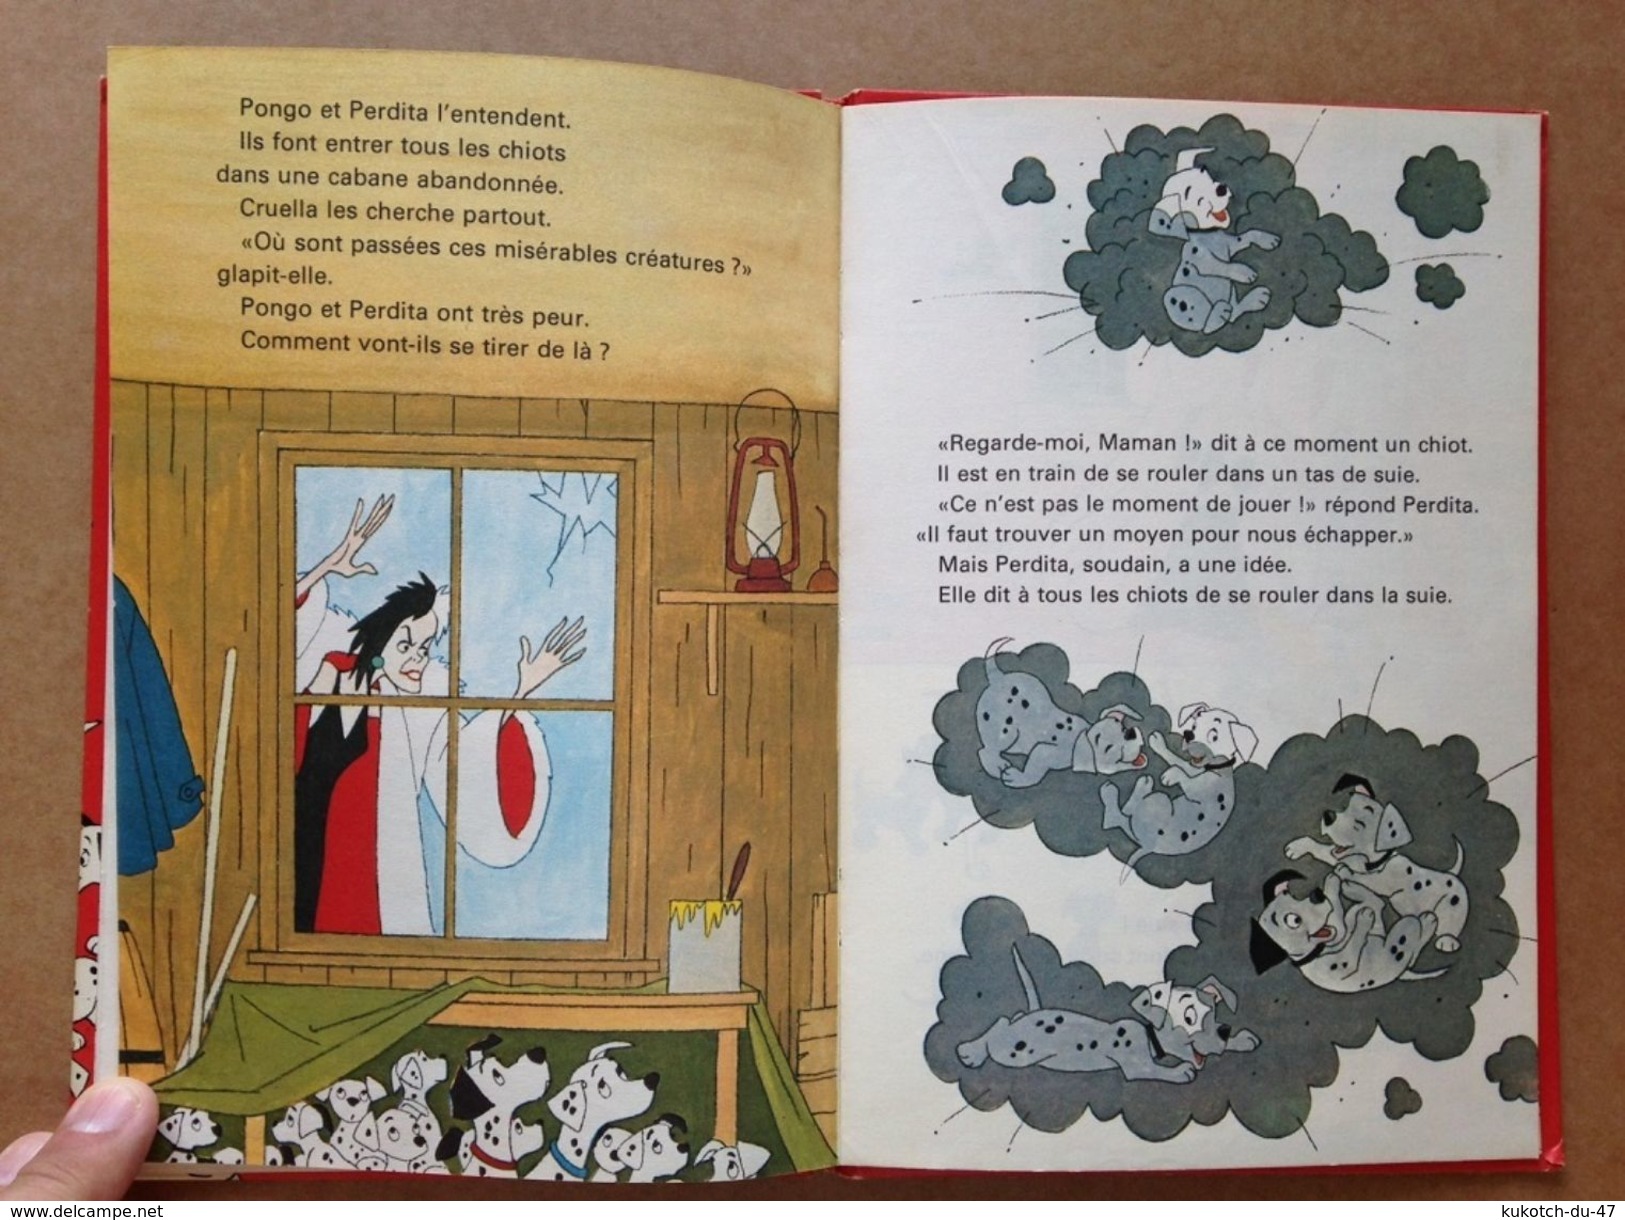 Disney - Mickey Club du livre - Les 101 dalmatiens (1982)